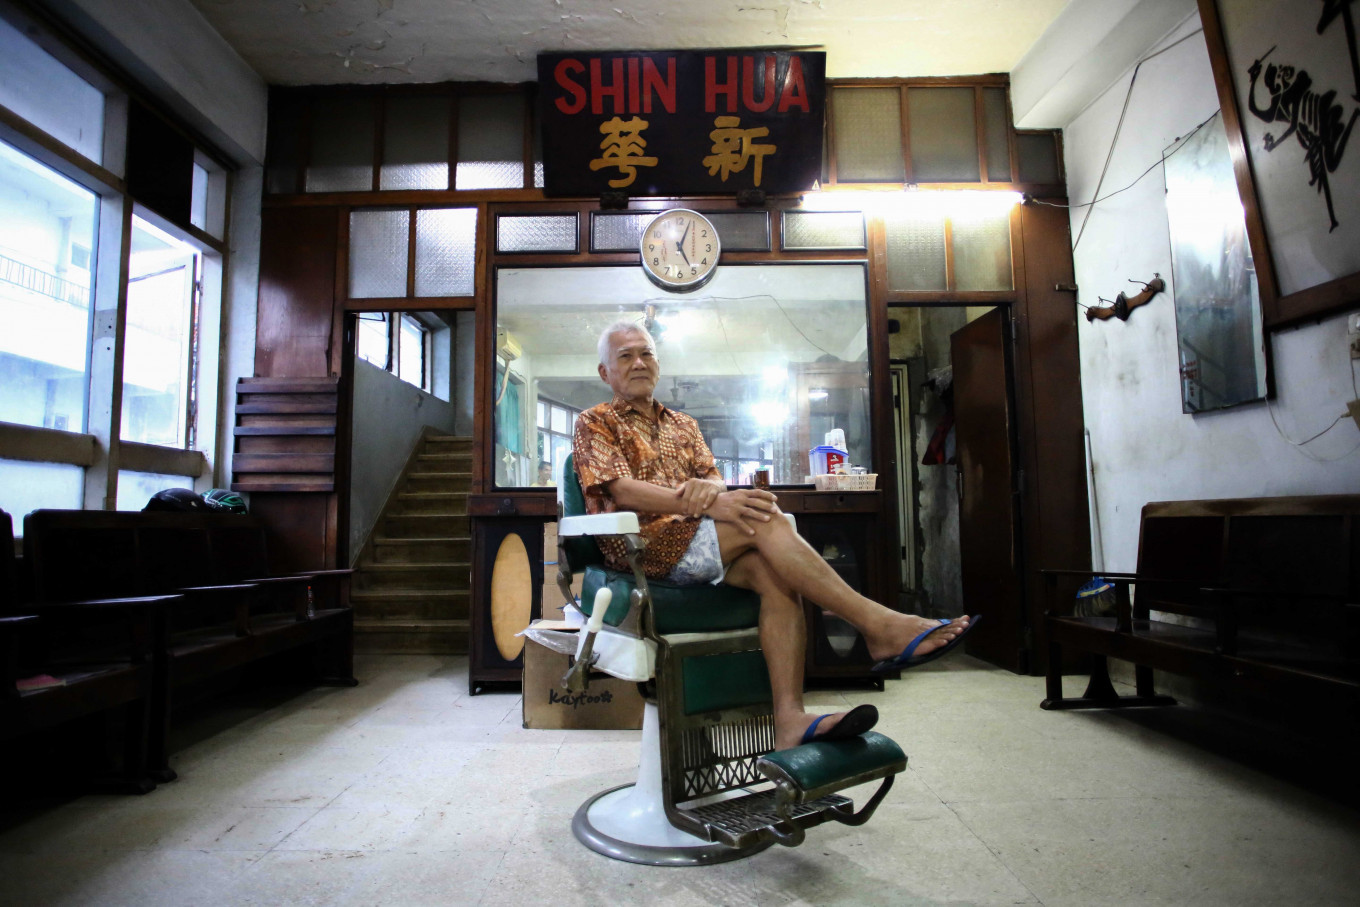 The passion and struggles of Shin Hua, Surabaya's oldest